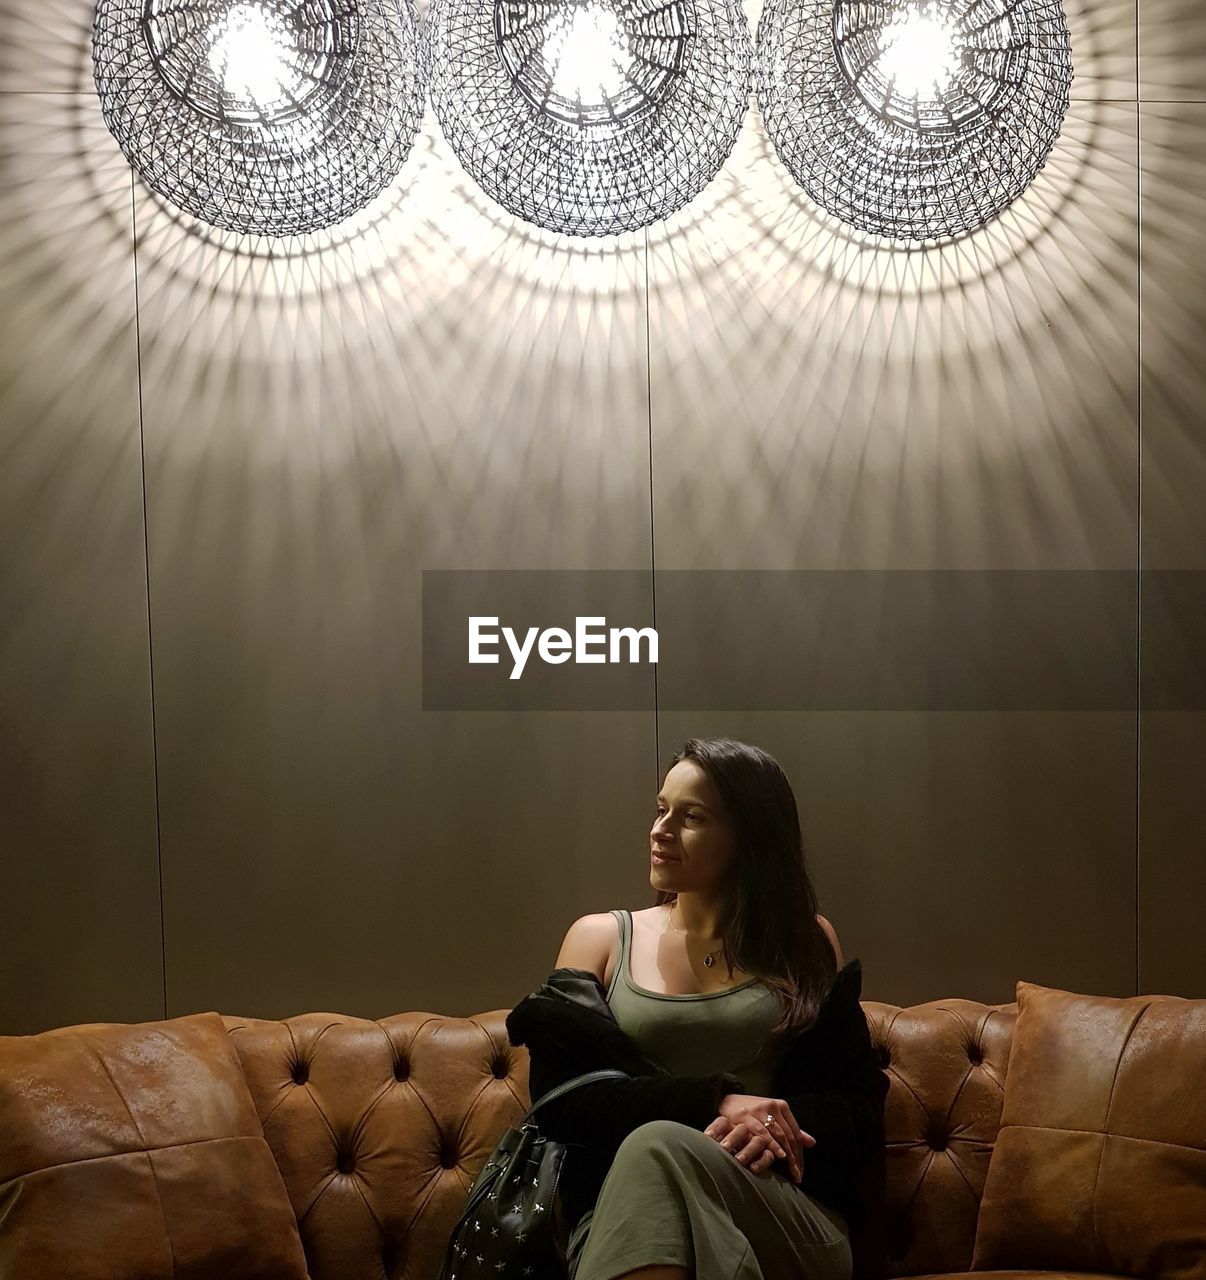 Woman sitting on sofa in illuminated room